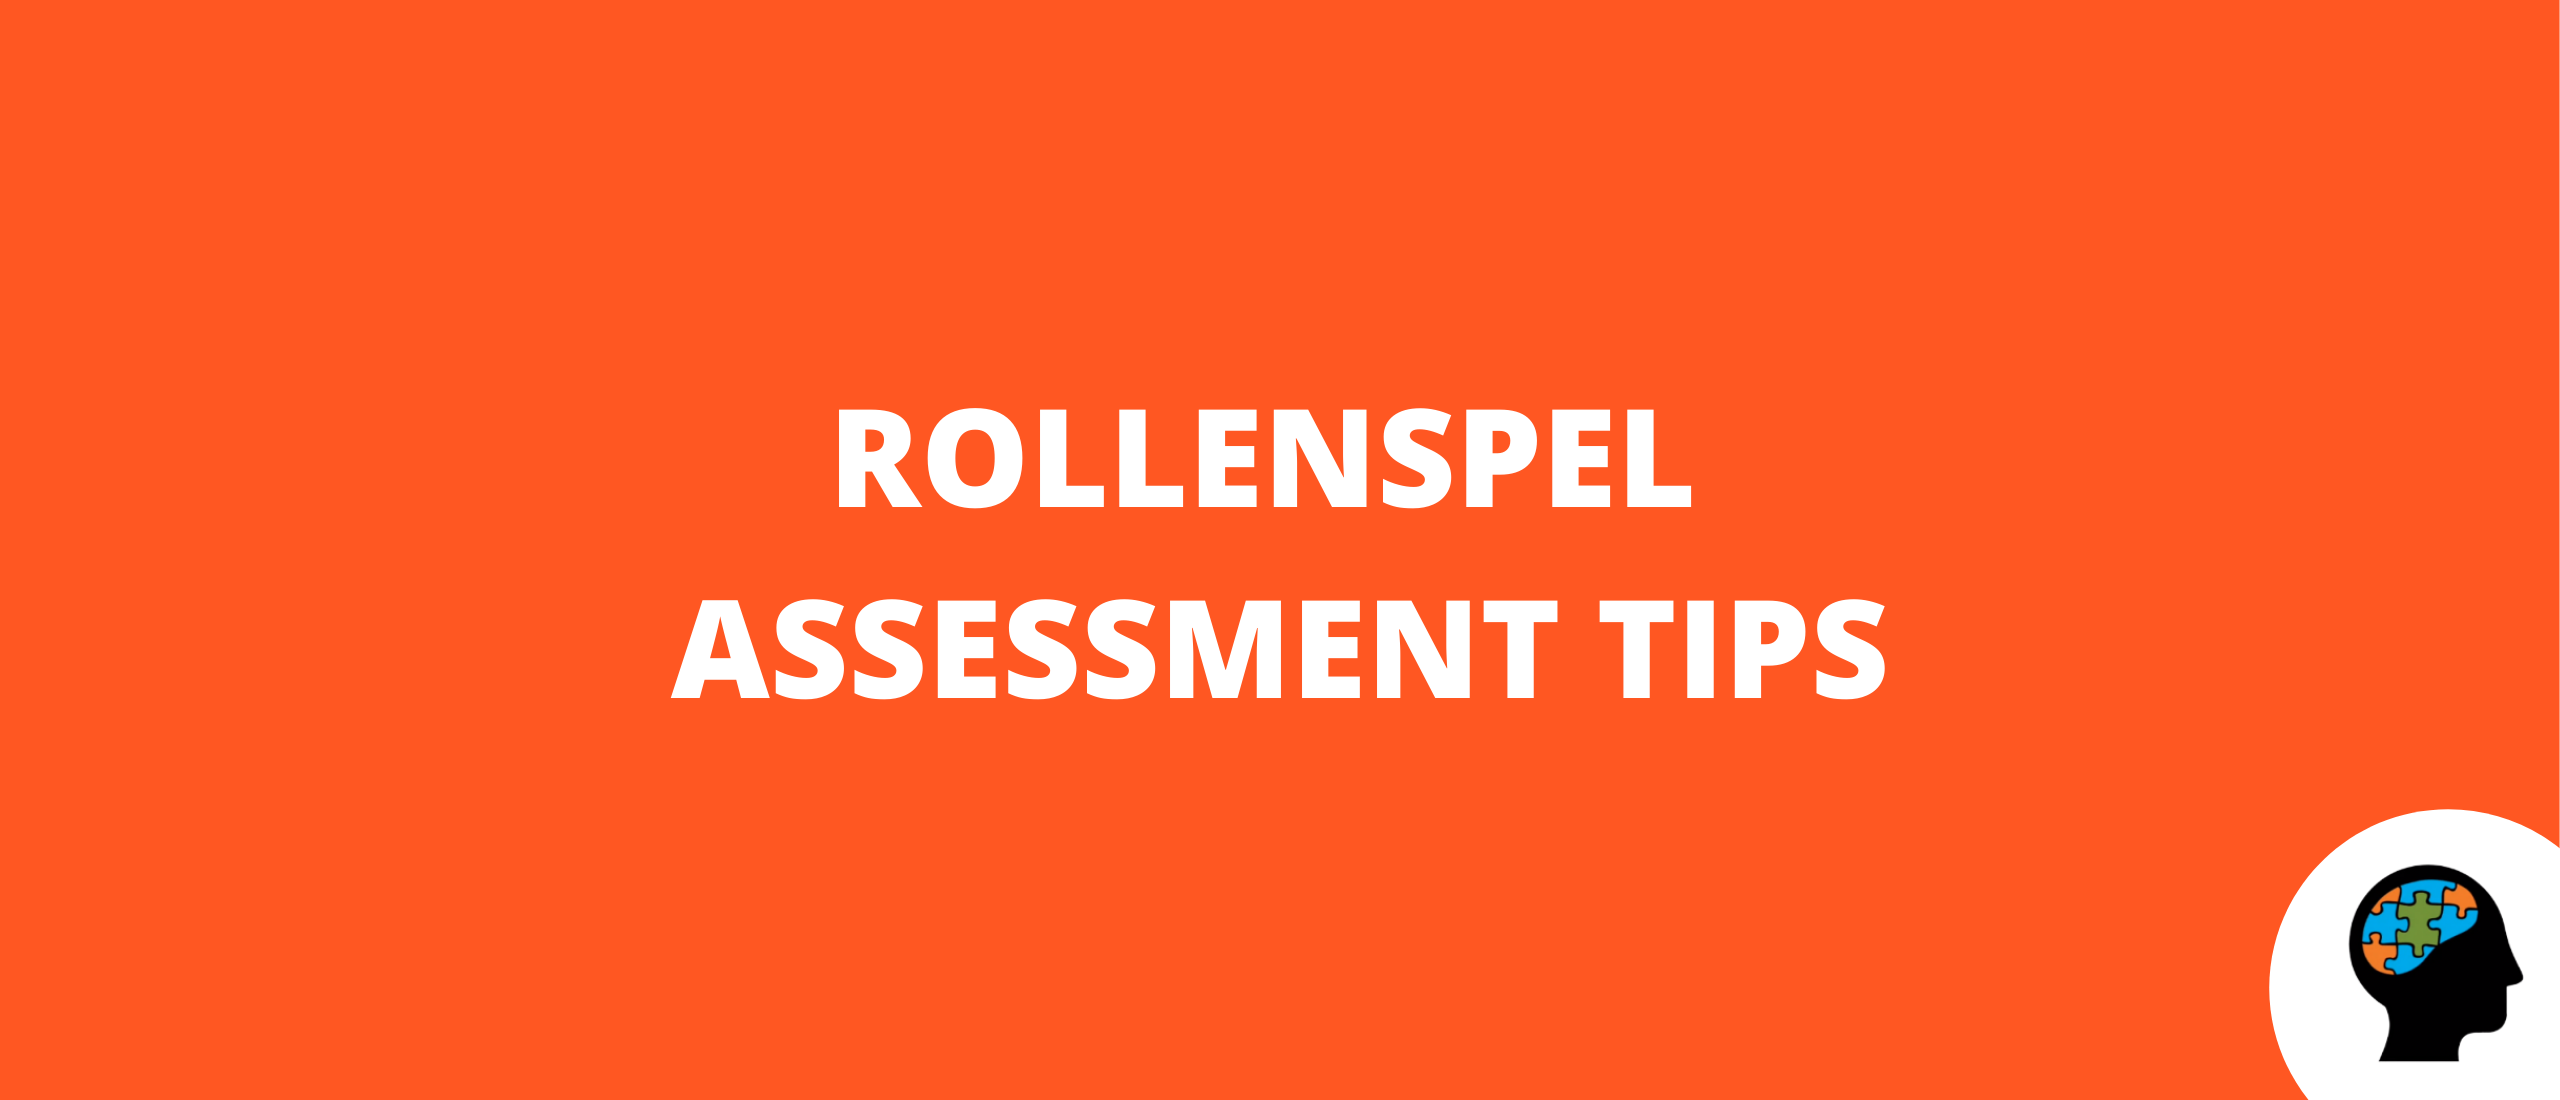 Rollenspel assessment tips